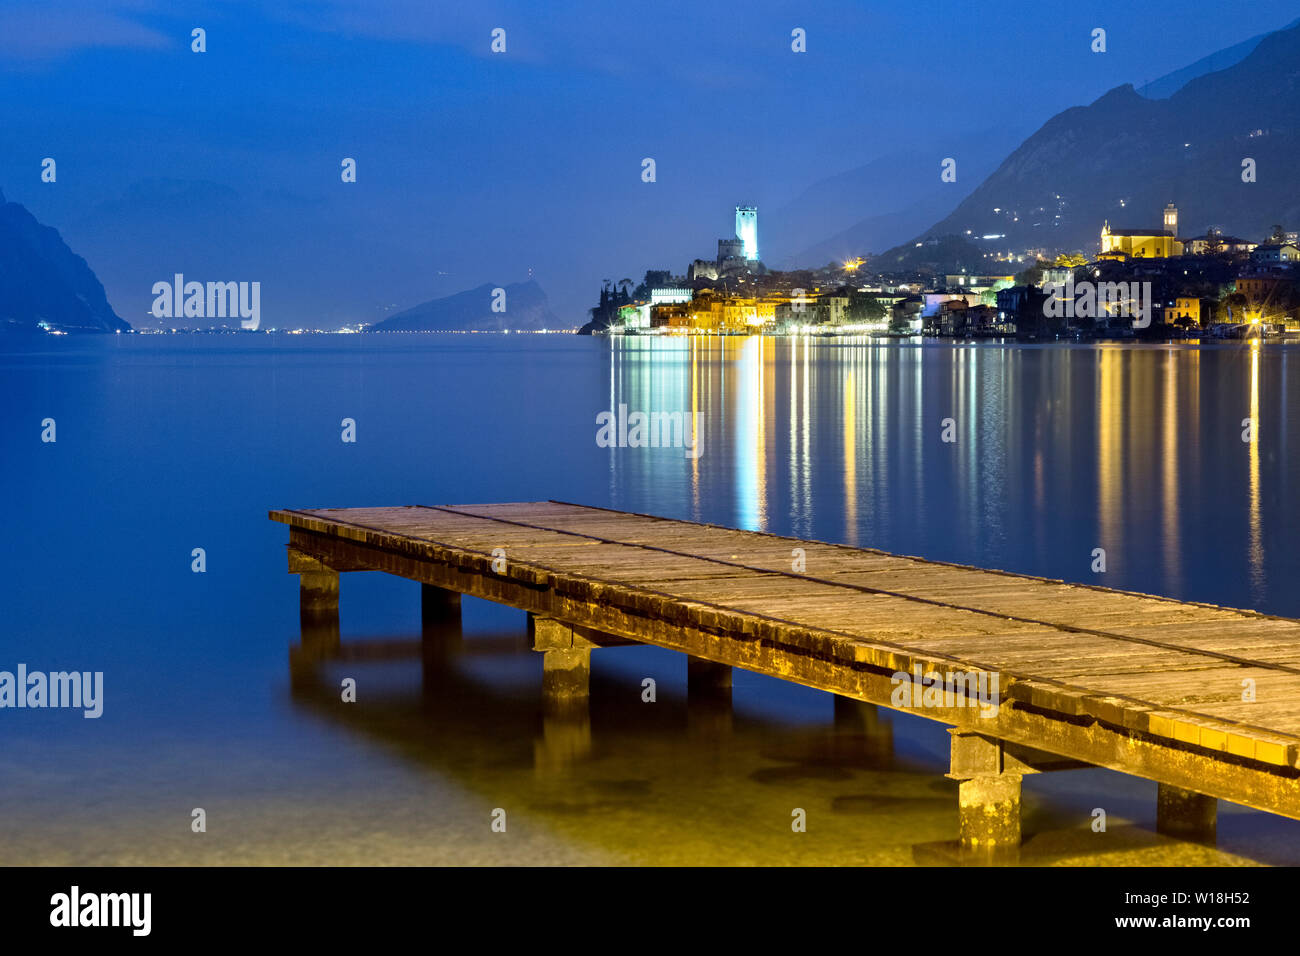 The picturesque town of Malcesine on Lake Garda. Verona province, Veneto, Italy, Europe. Stock Photo